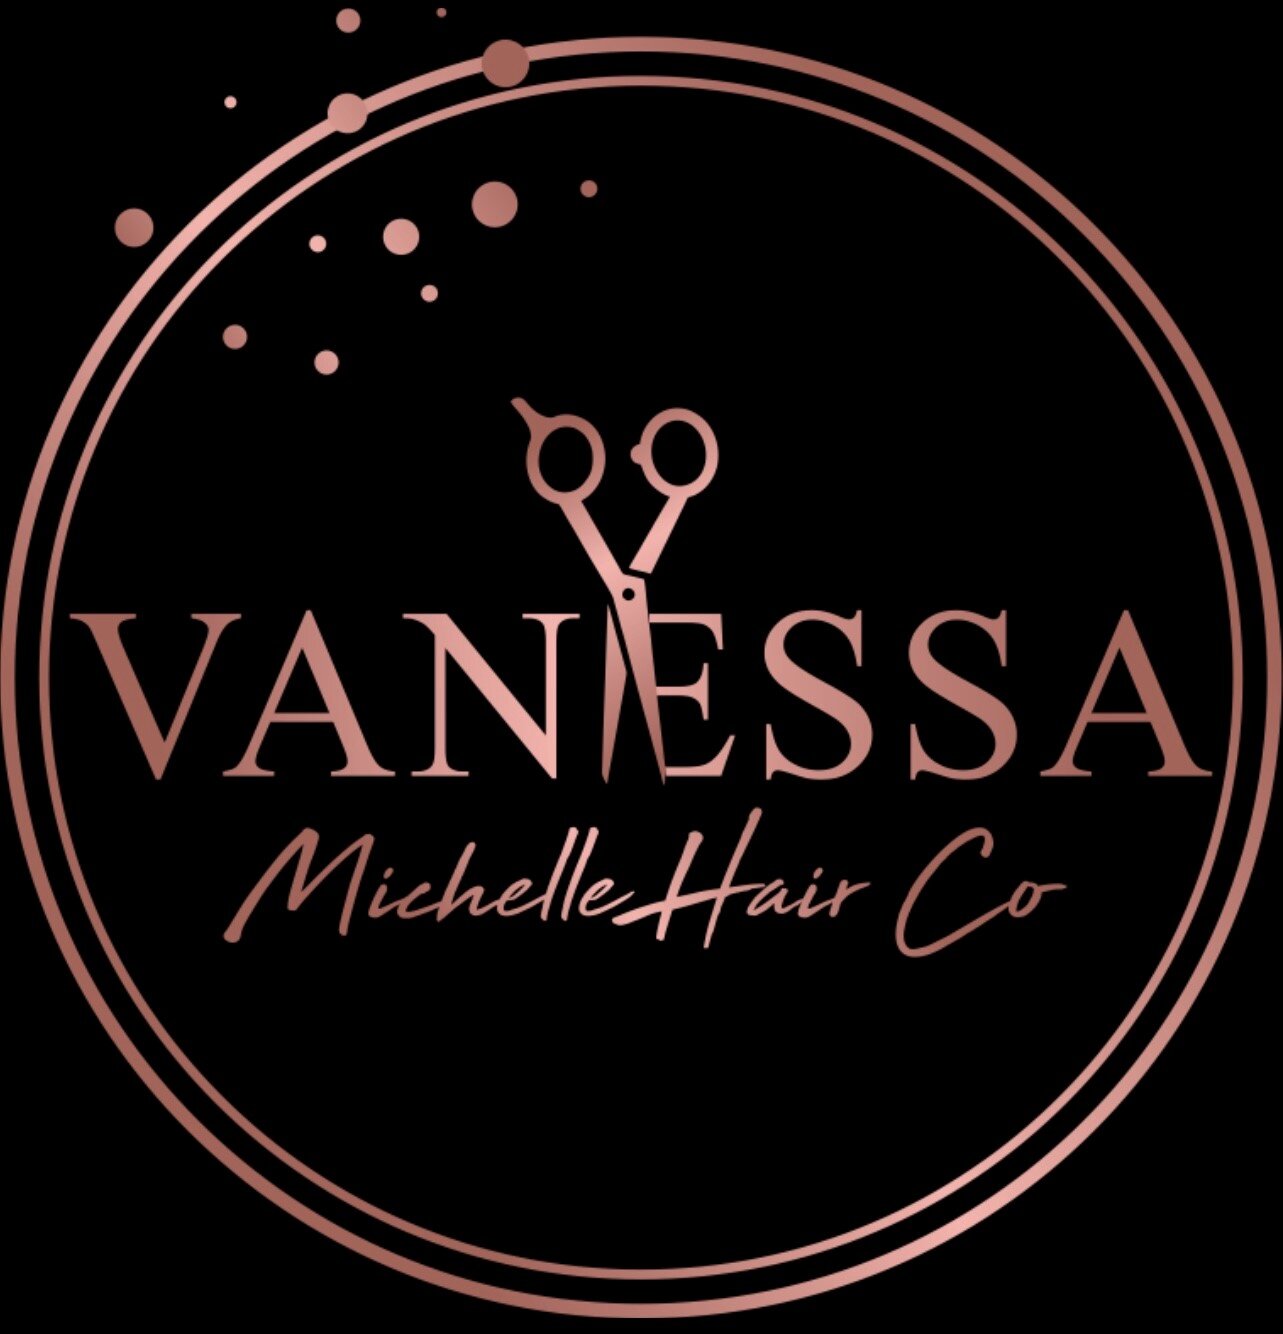 Vanessa Michelle Hair Co